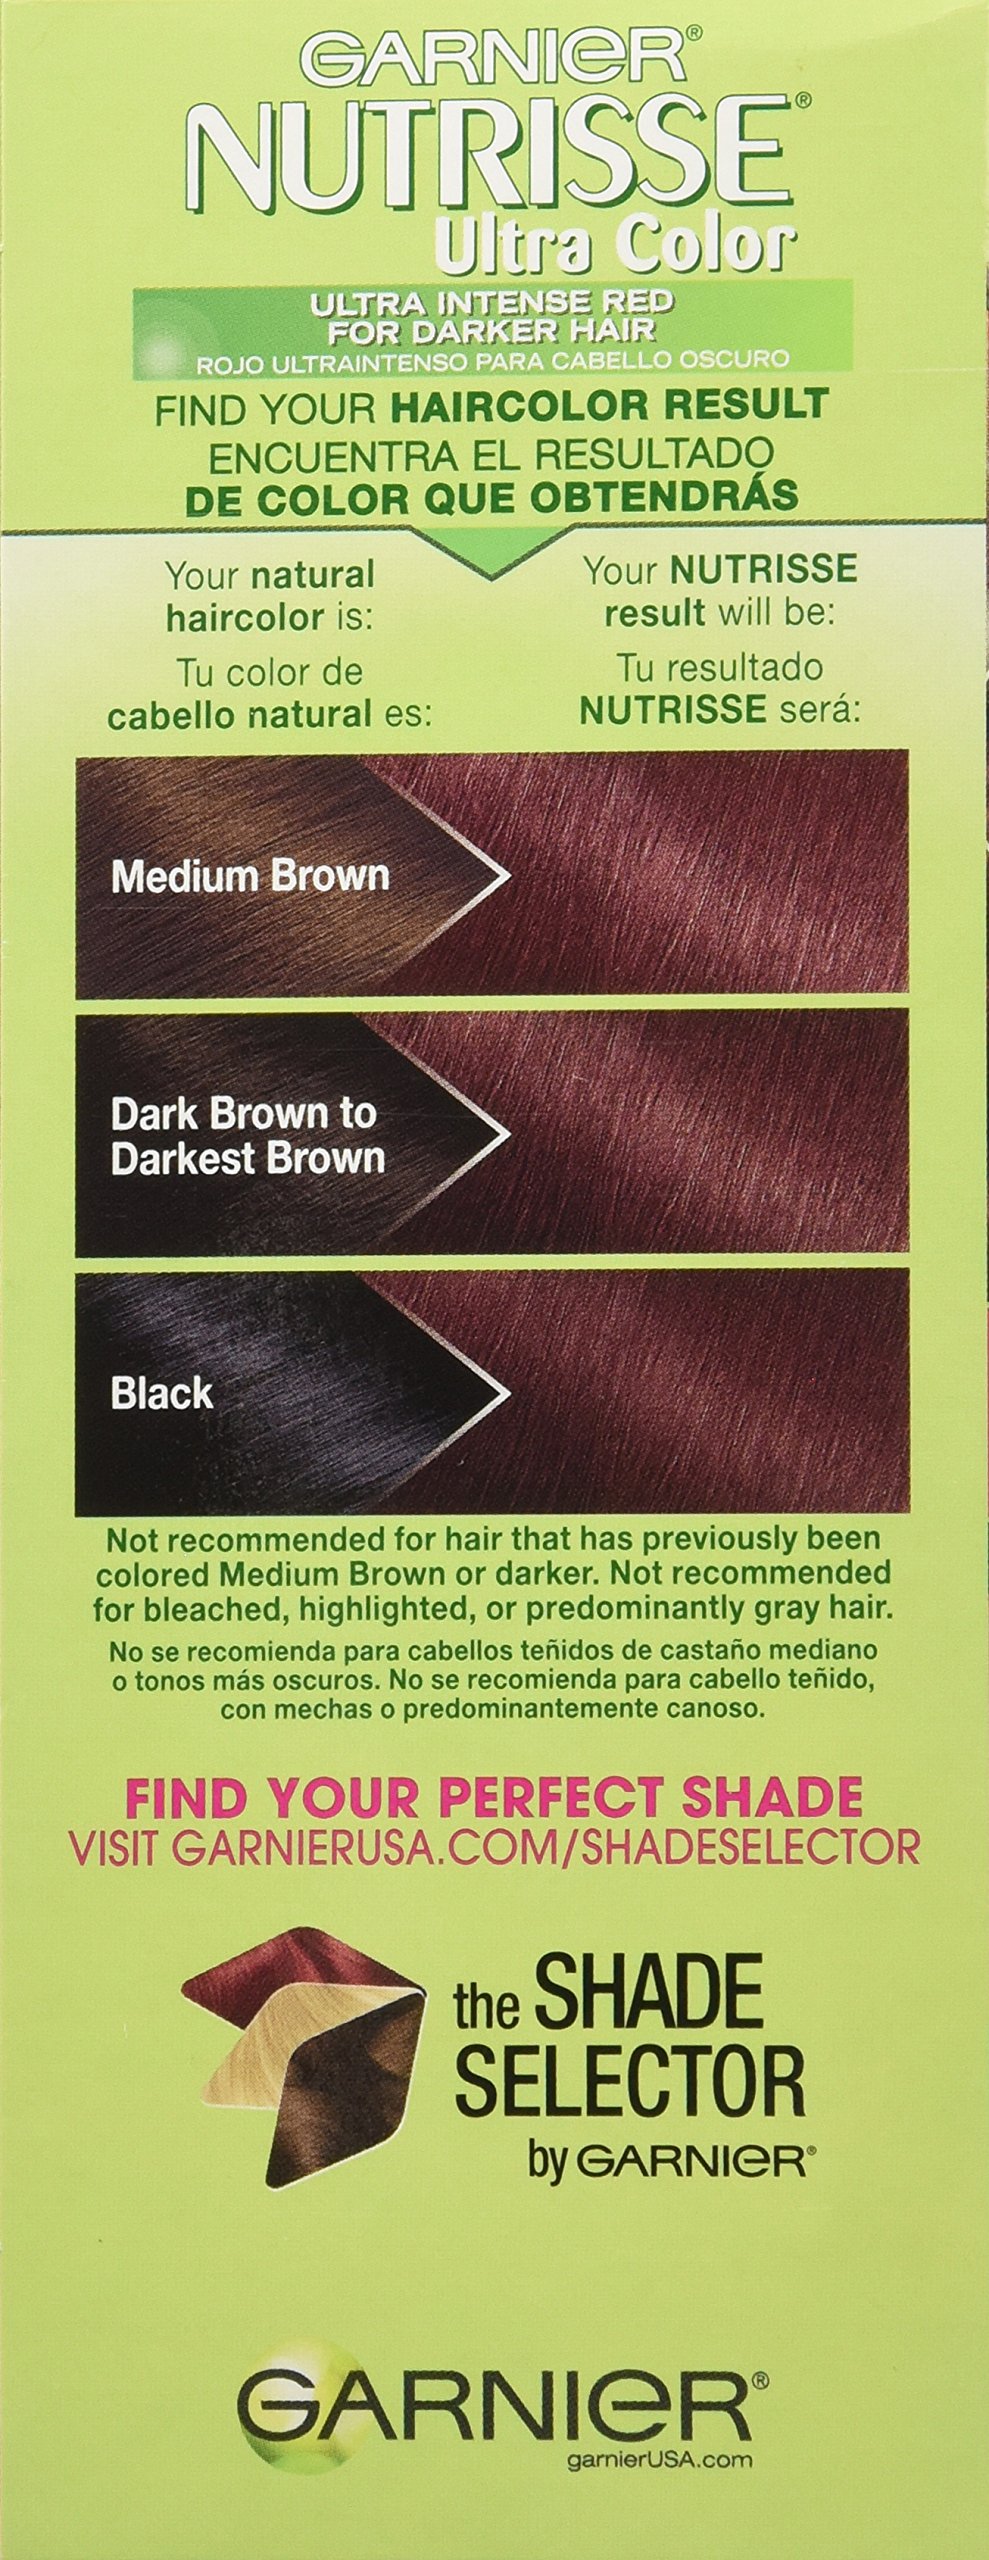 Garnier Hair Color Nutrisse Ultra Color Nourishing Creme, R2 Medium Intense Auburn (Goji Berry) Red Permanent Hair Dye, 1 Count (Packaging May Vary)